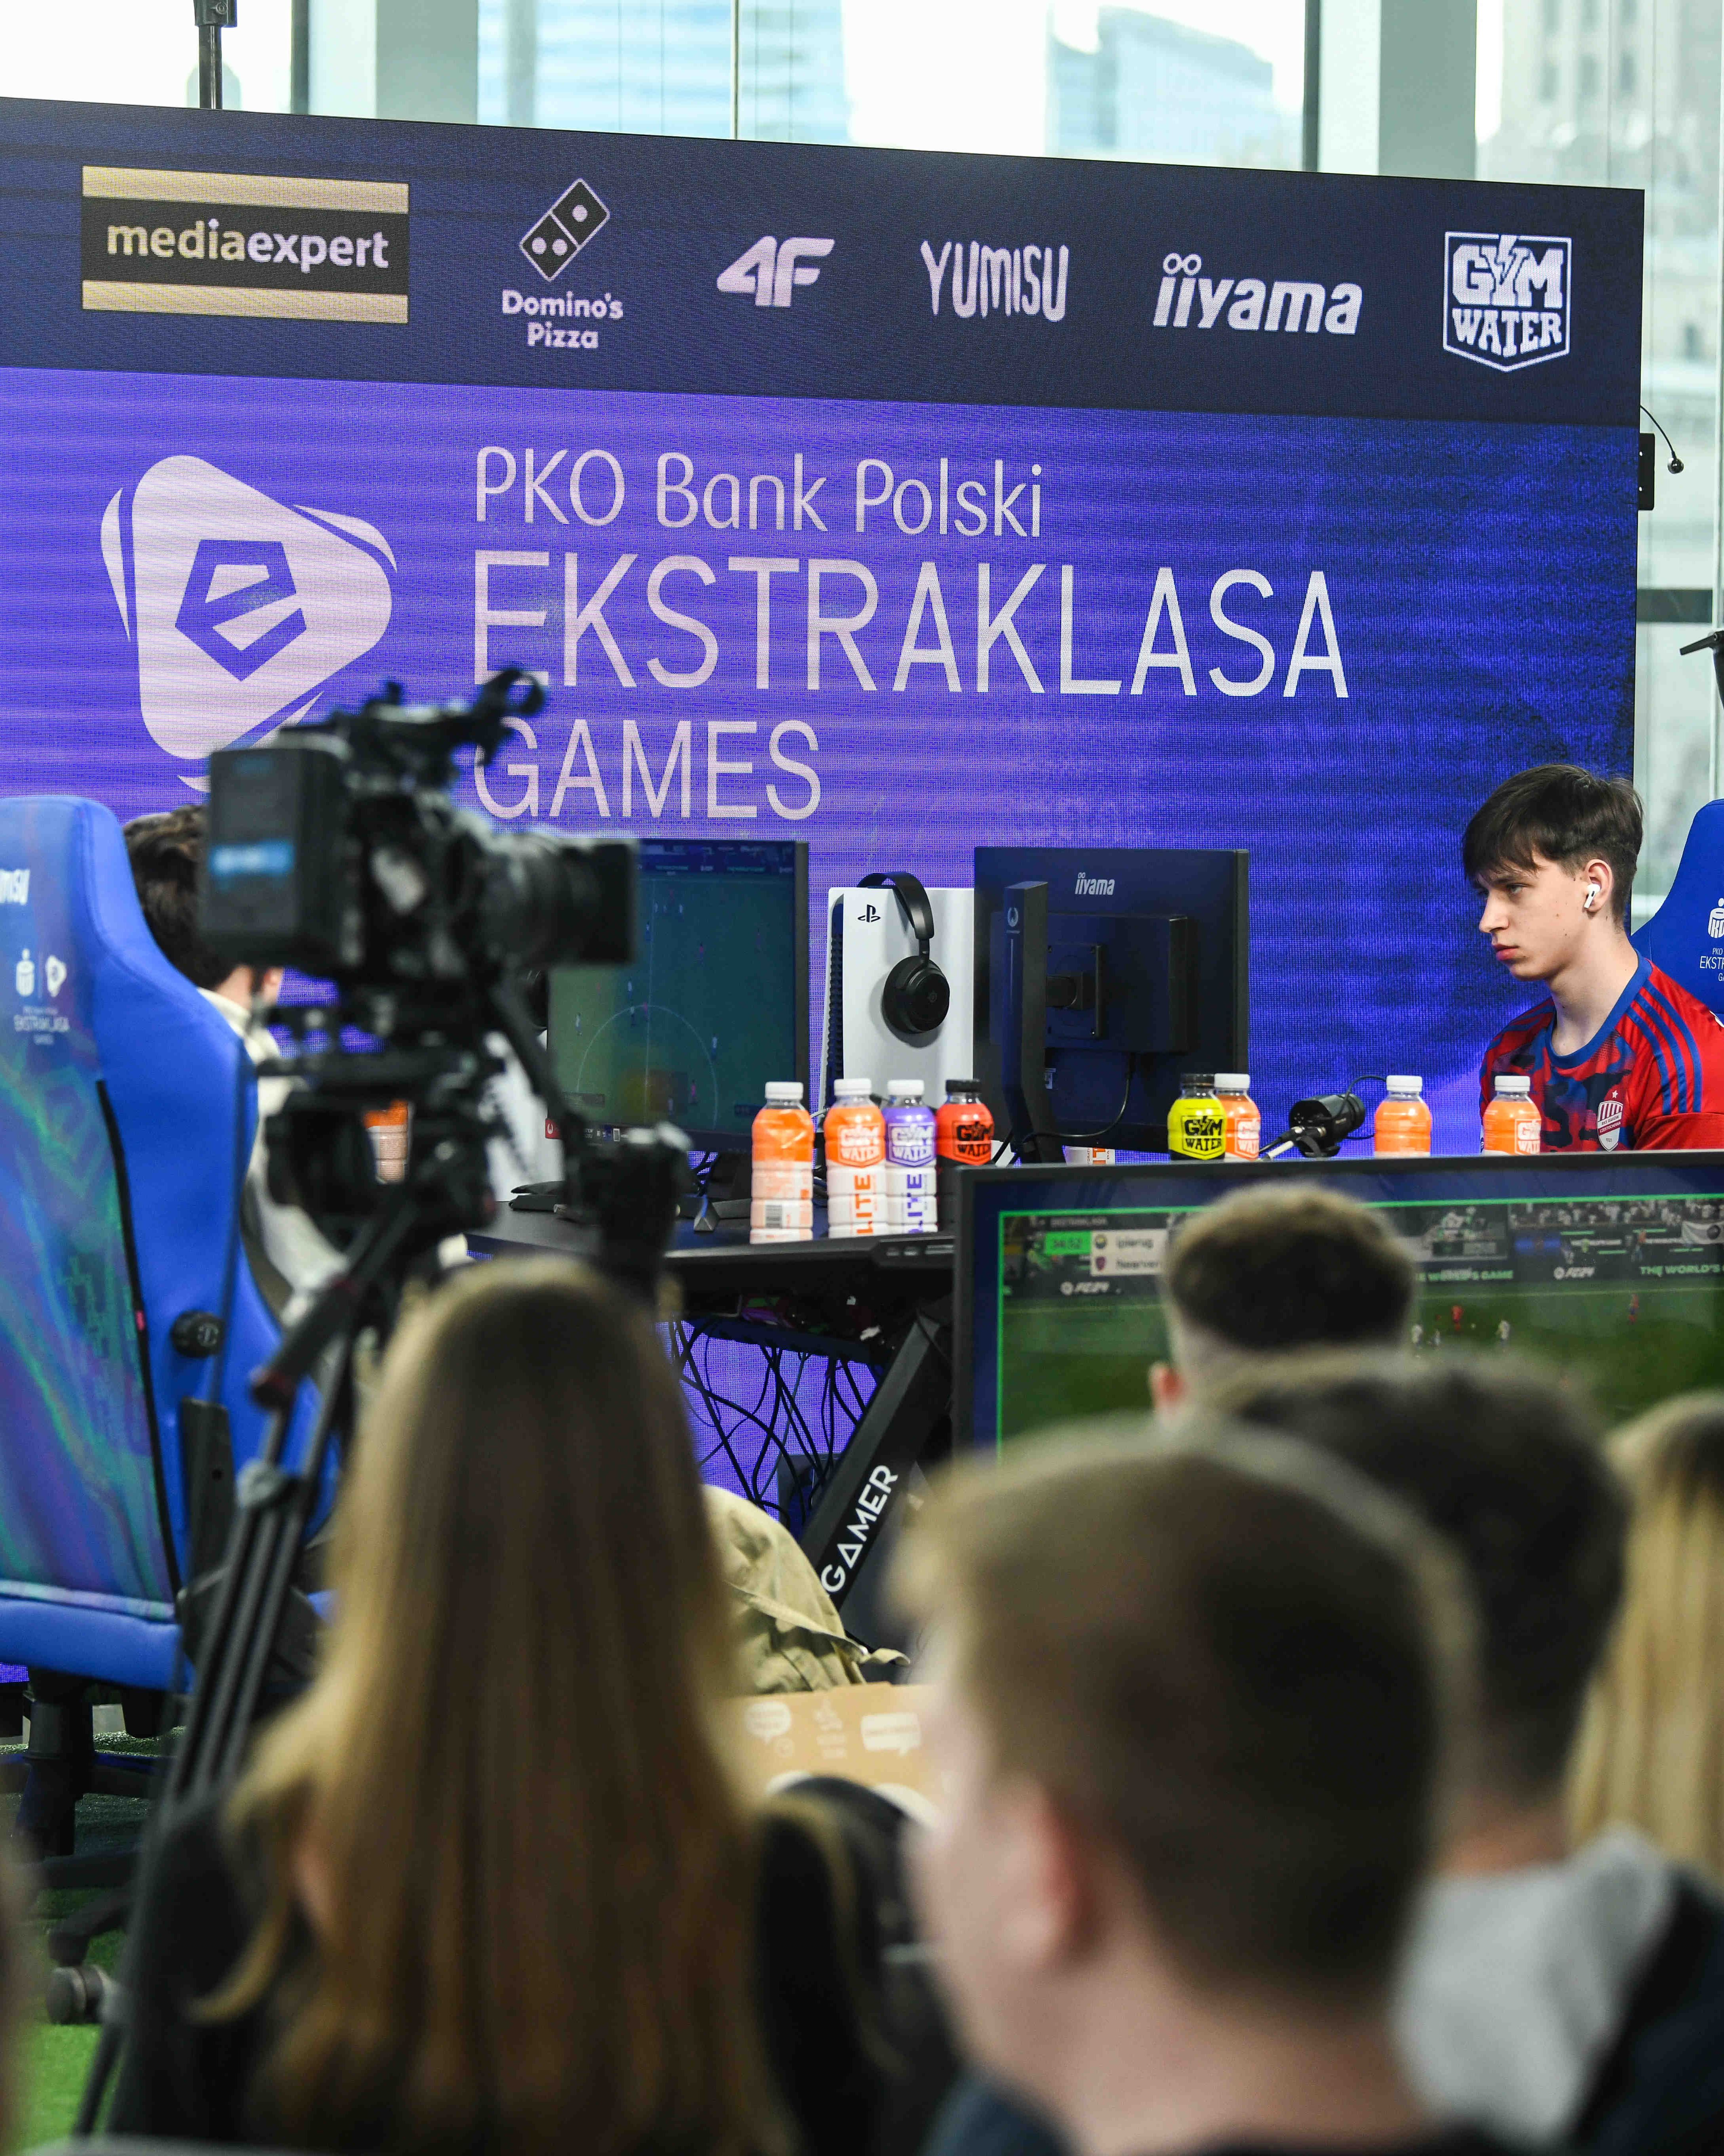 PKO BP Ekstraklasa Games Blog